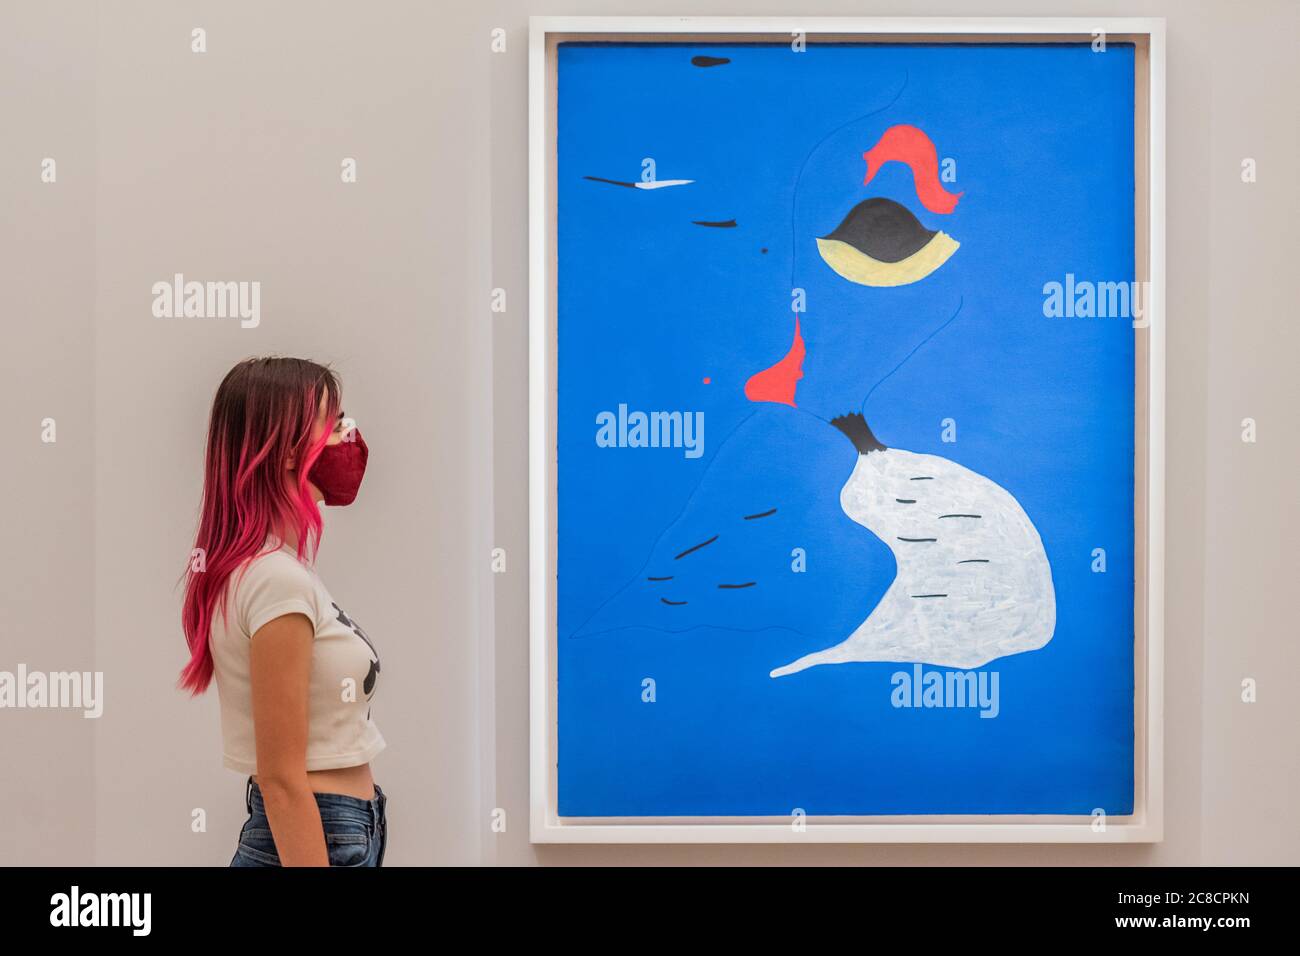 EMBARGOED TILL 0900 GMT 24/7/20 - Joan Miró, Peinture (Femme au chapeau  rouge), Estimate: £20-30 million - Sotheby's London present a preview of a  one-off auction and exhibition that spans over half